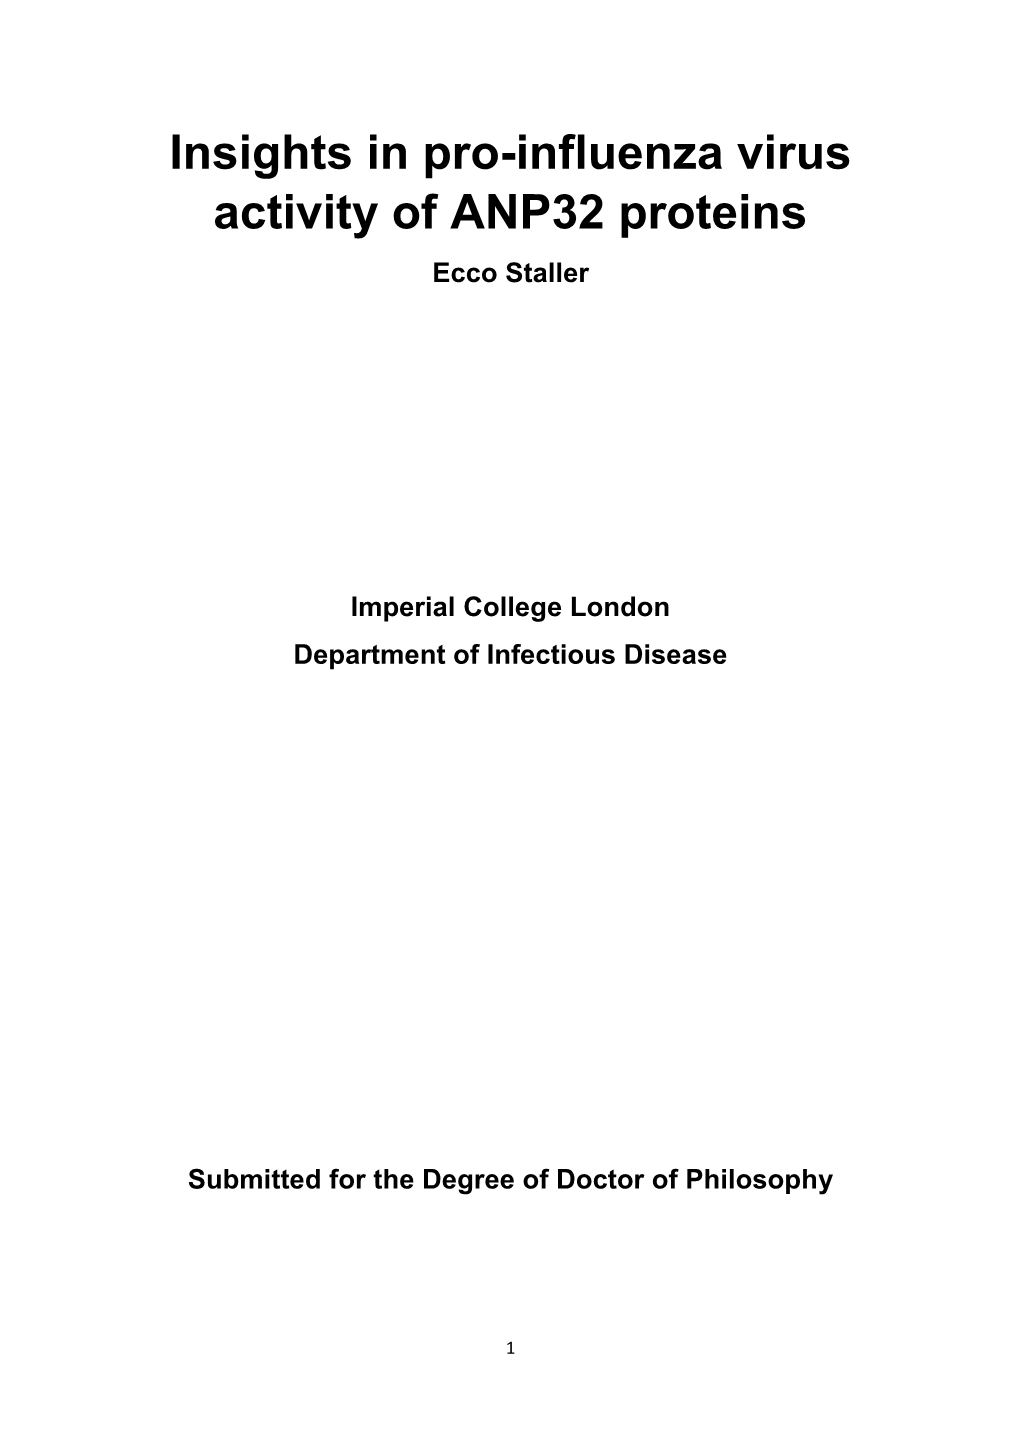 Insights in Pro-Influenza Virus Activity of ANP32 Proteins Ecco Staller